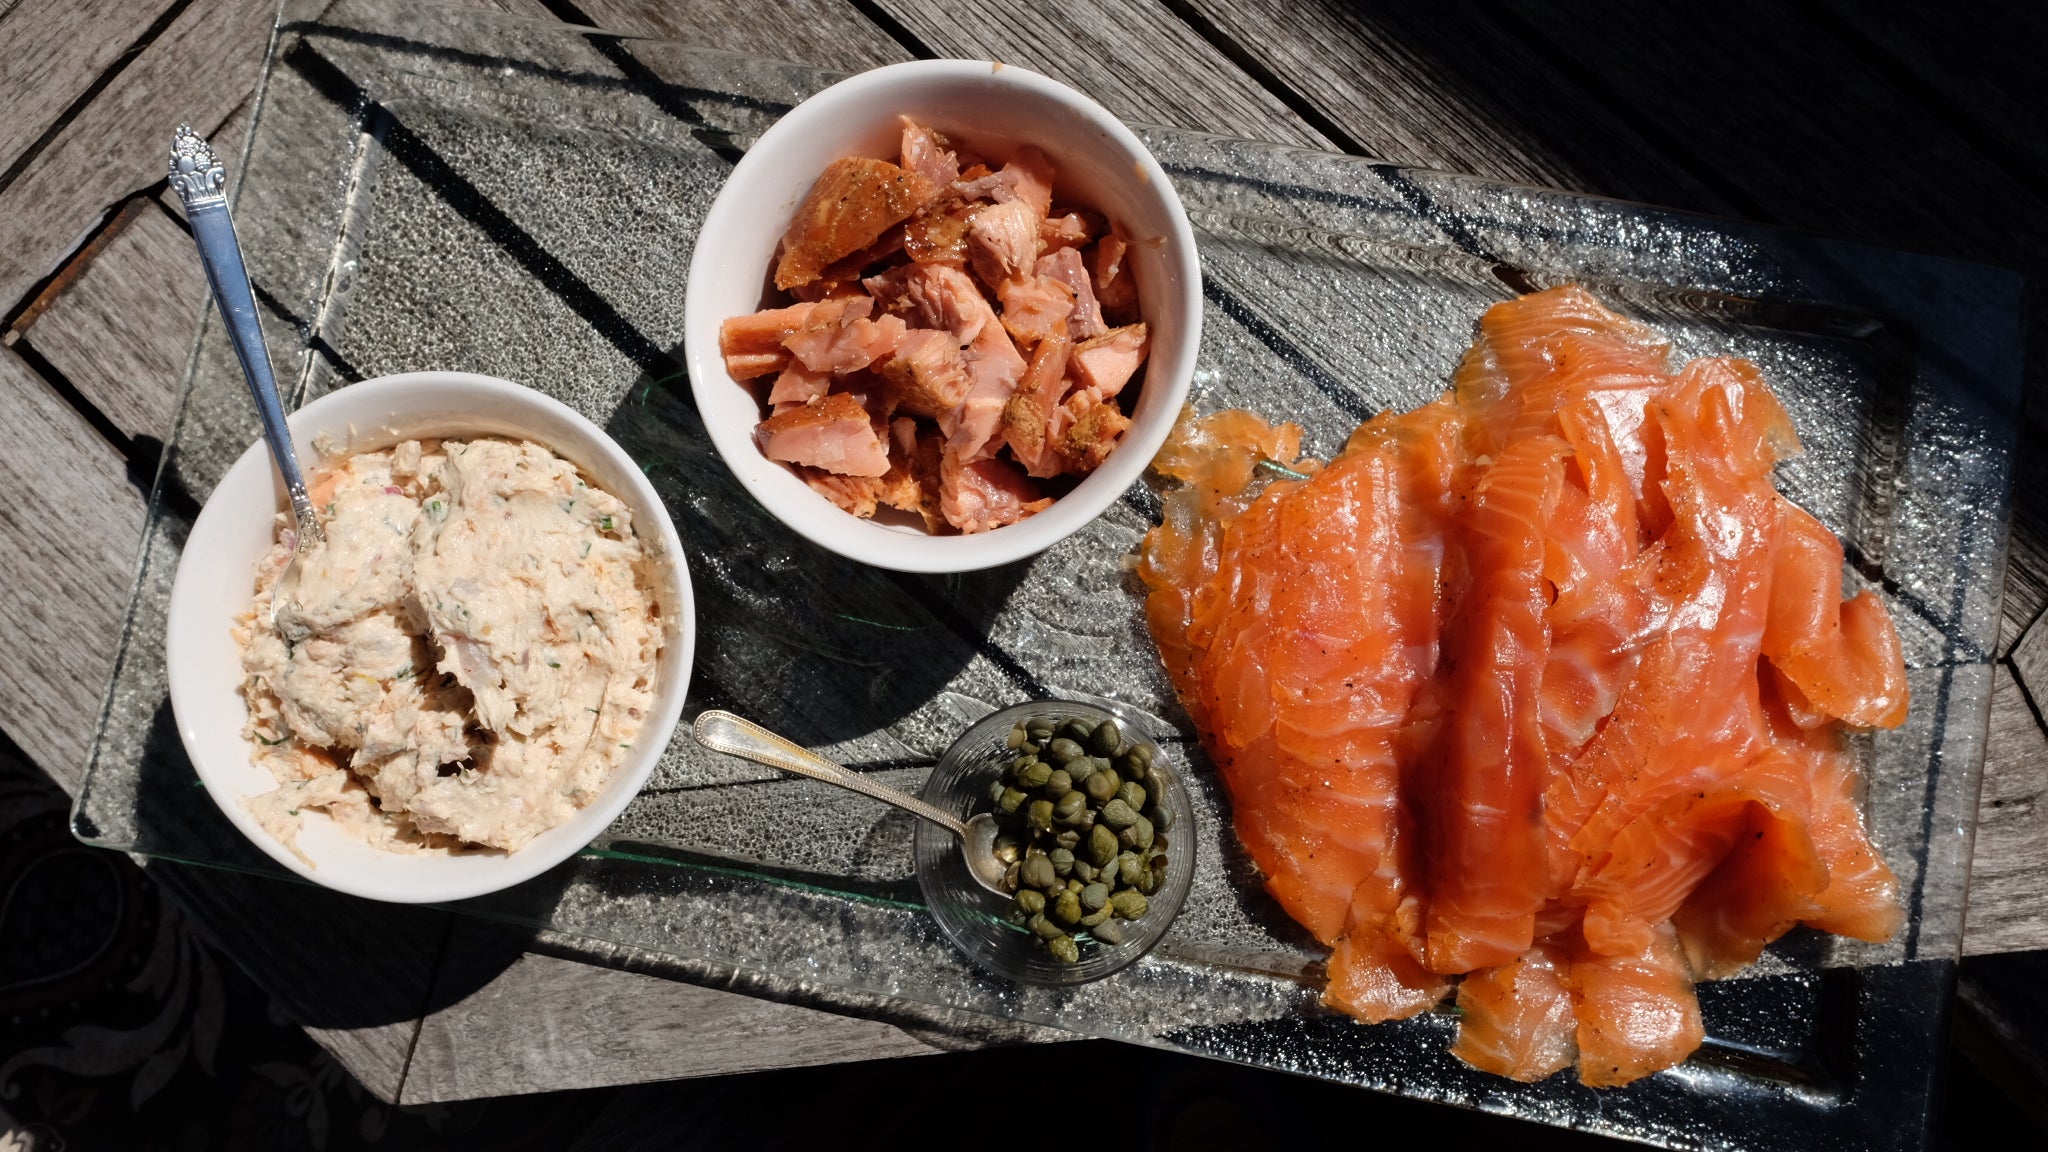 Load video: The making of Zaidies smoked salmon.